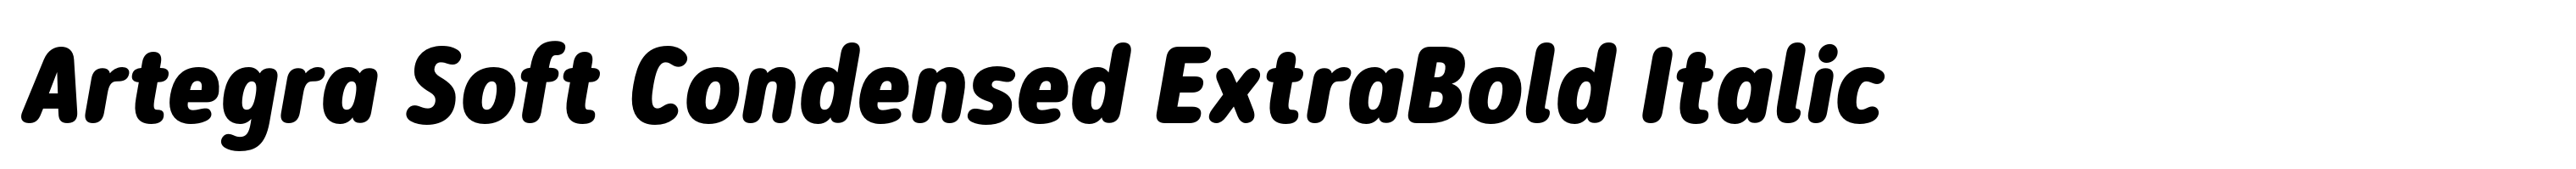 Artegra Soft Condensed ExtraBold Italic